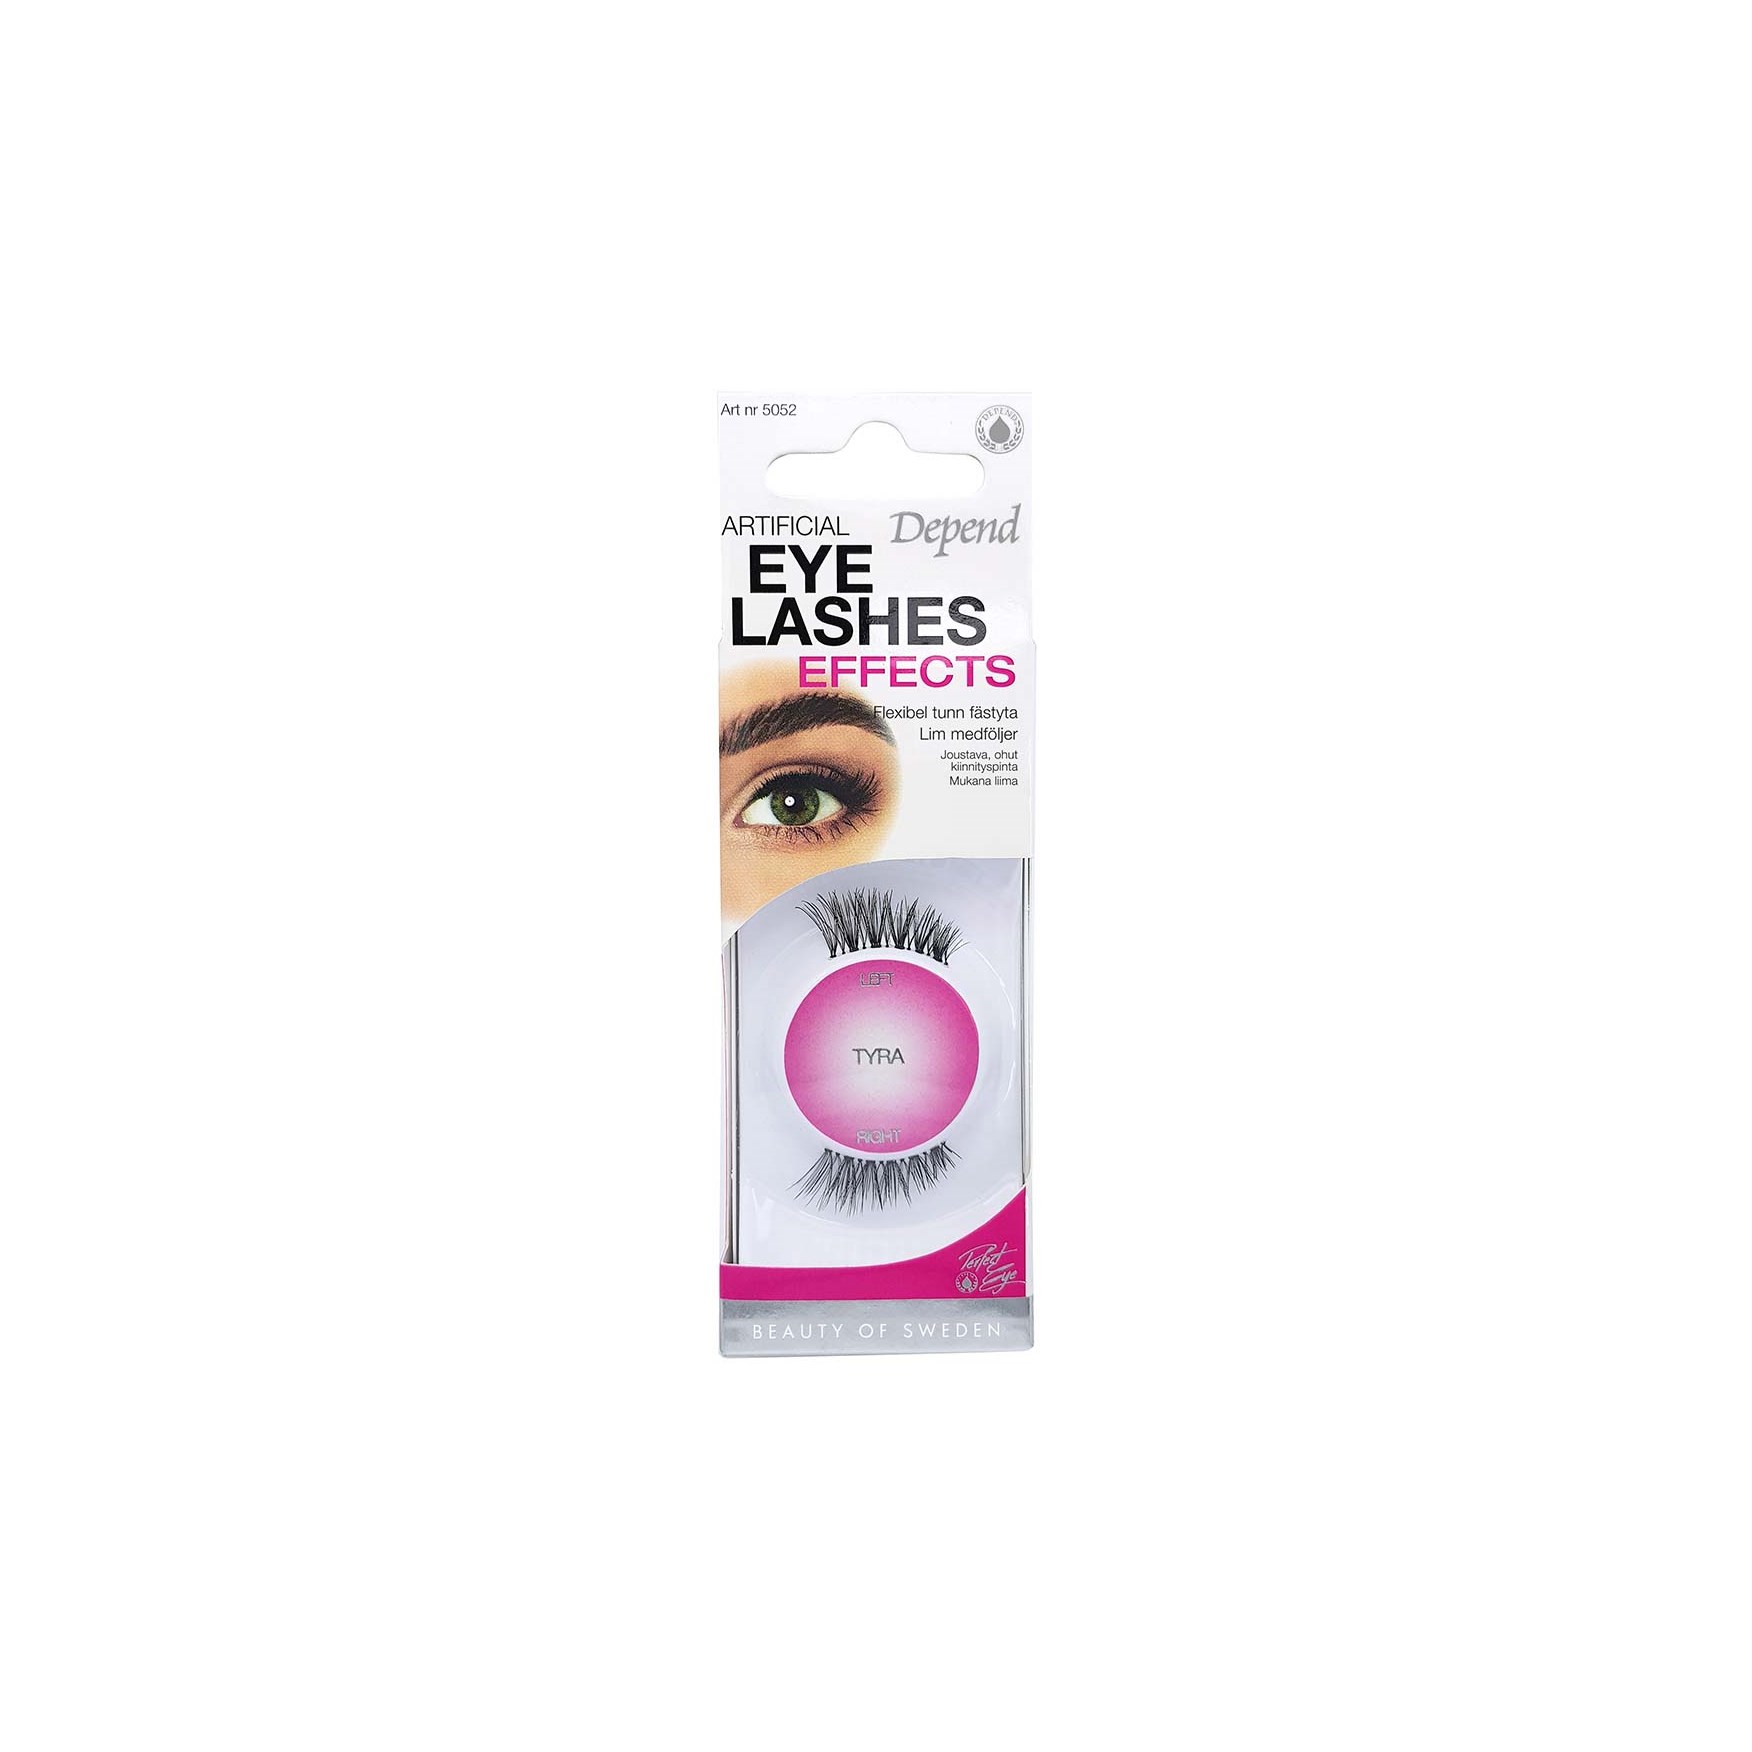 Depend Perfect Eye Artificial Eyelashes  Emma